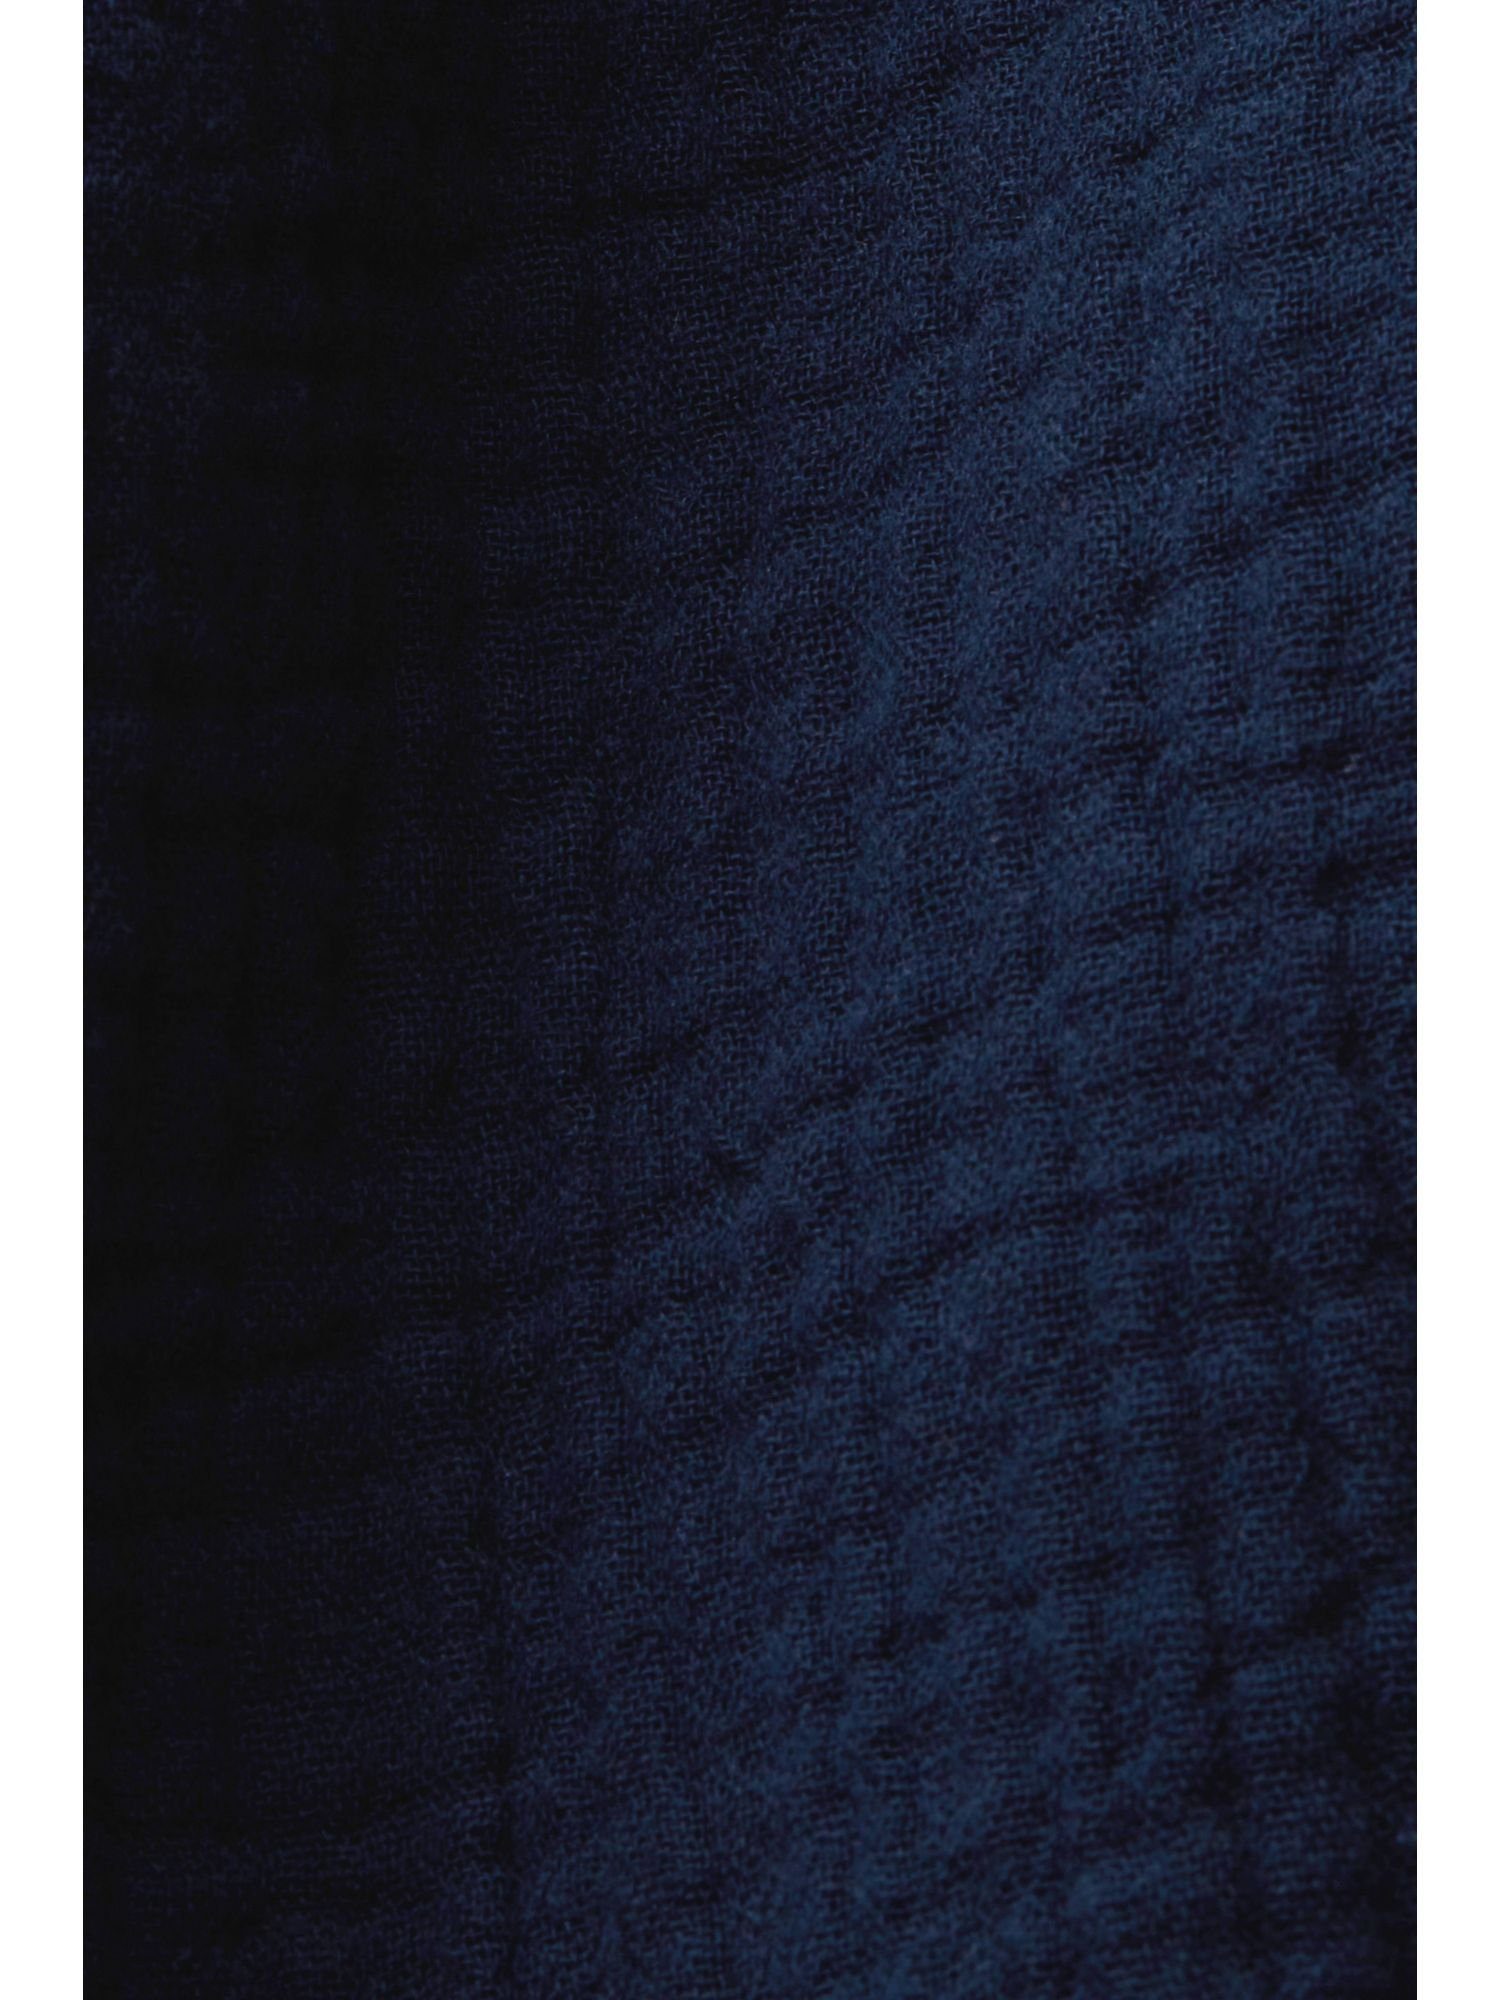 Hemdblusenkleid Baumwolle % Bindegürtel, mit Esprit NAVY 100 Midikleid